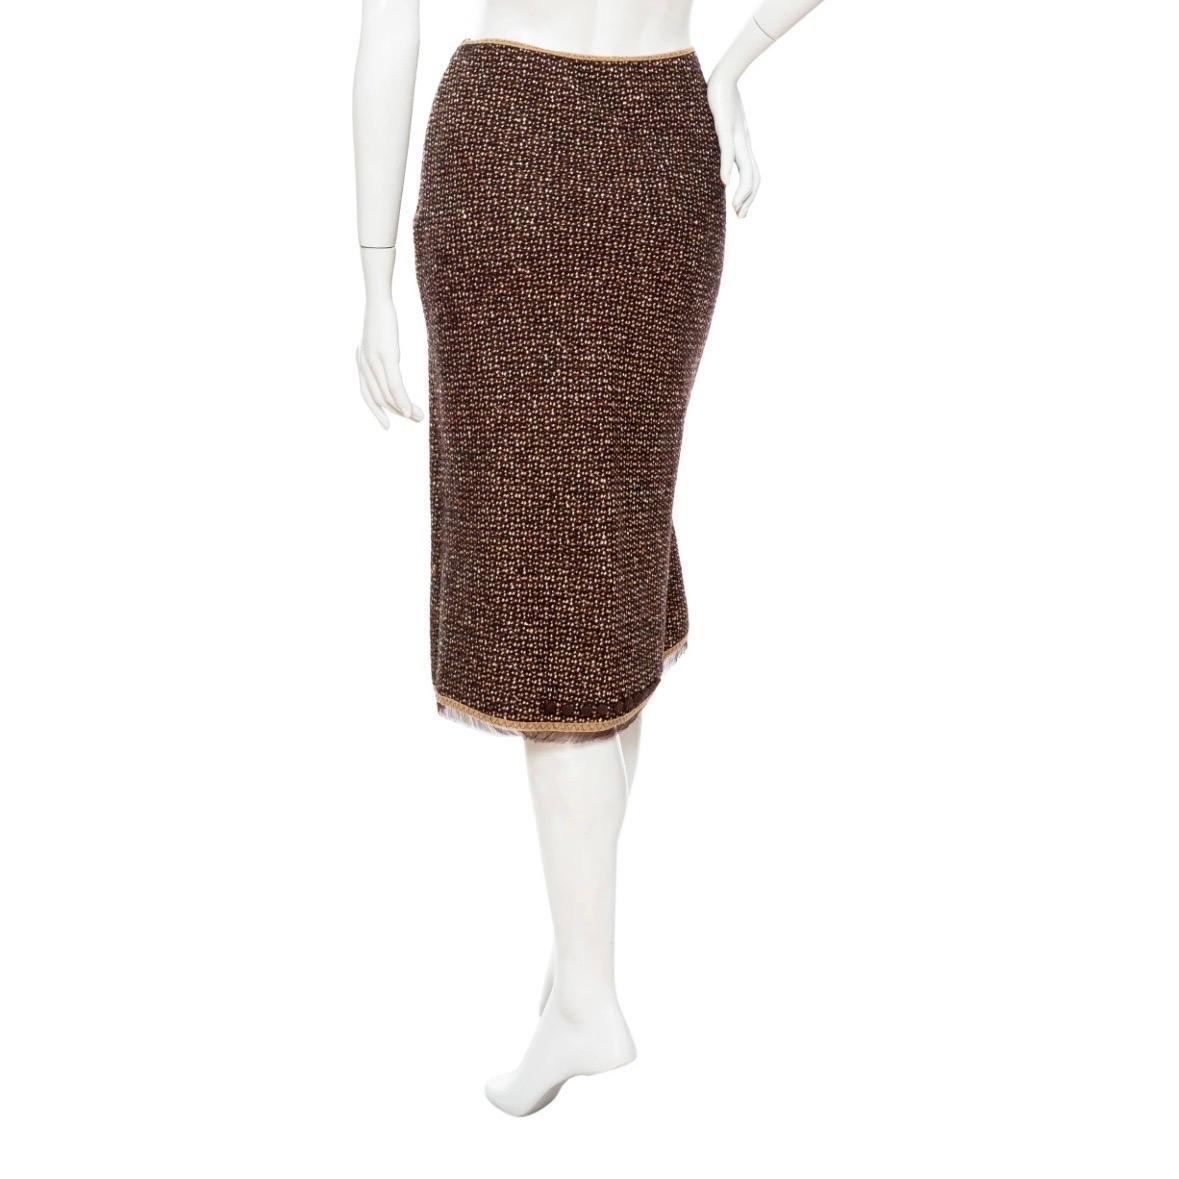 Prada Brown and Tan Virgin Wool Coat and Skirt Two-Piece Set 2